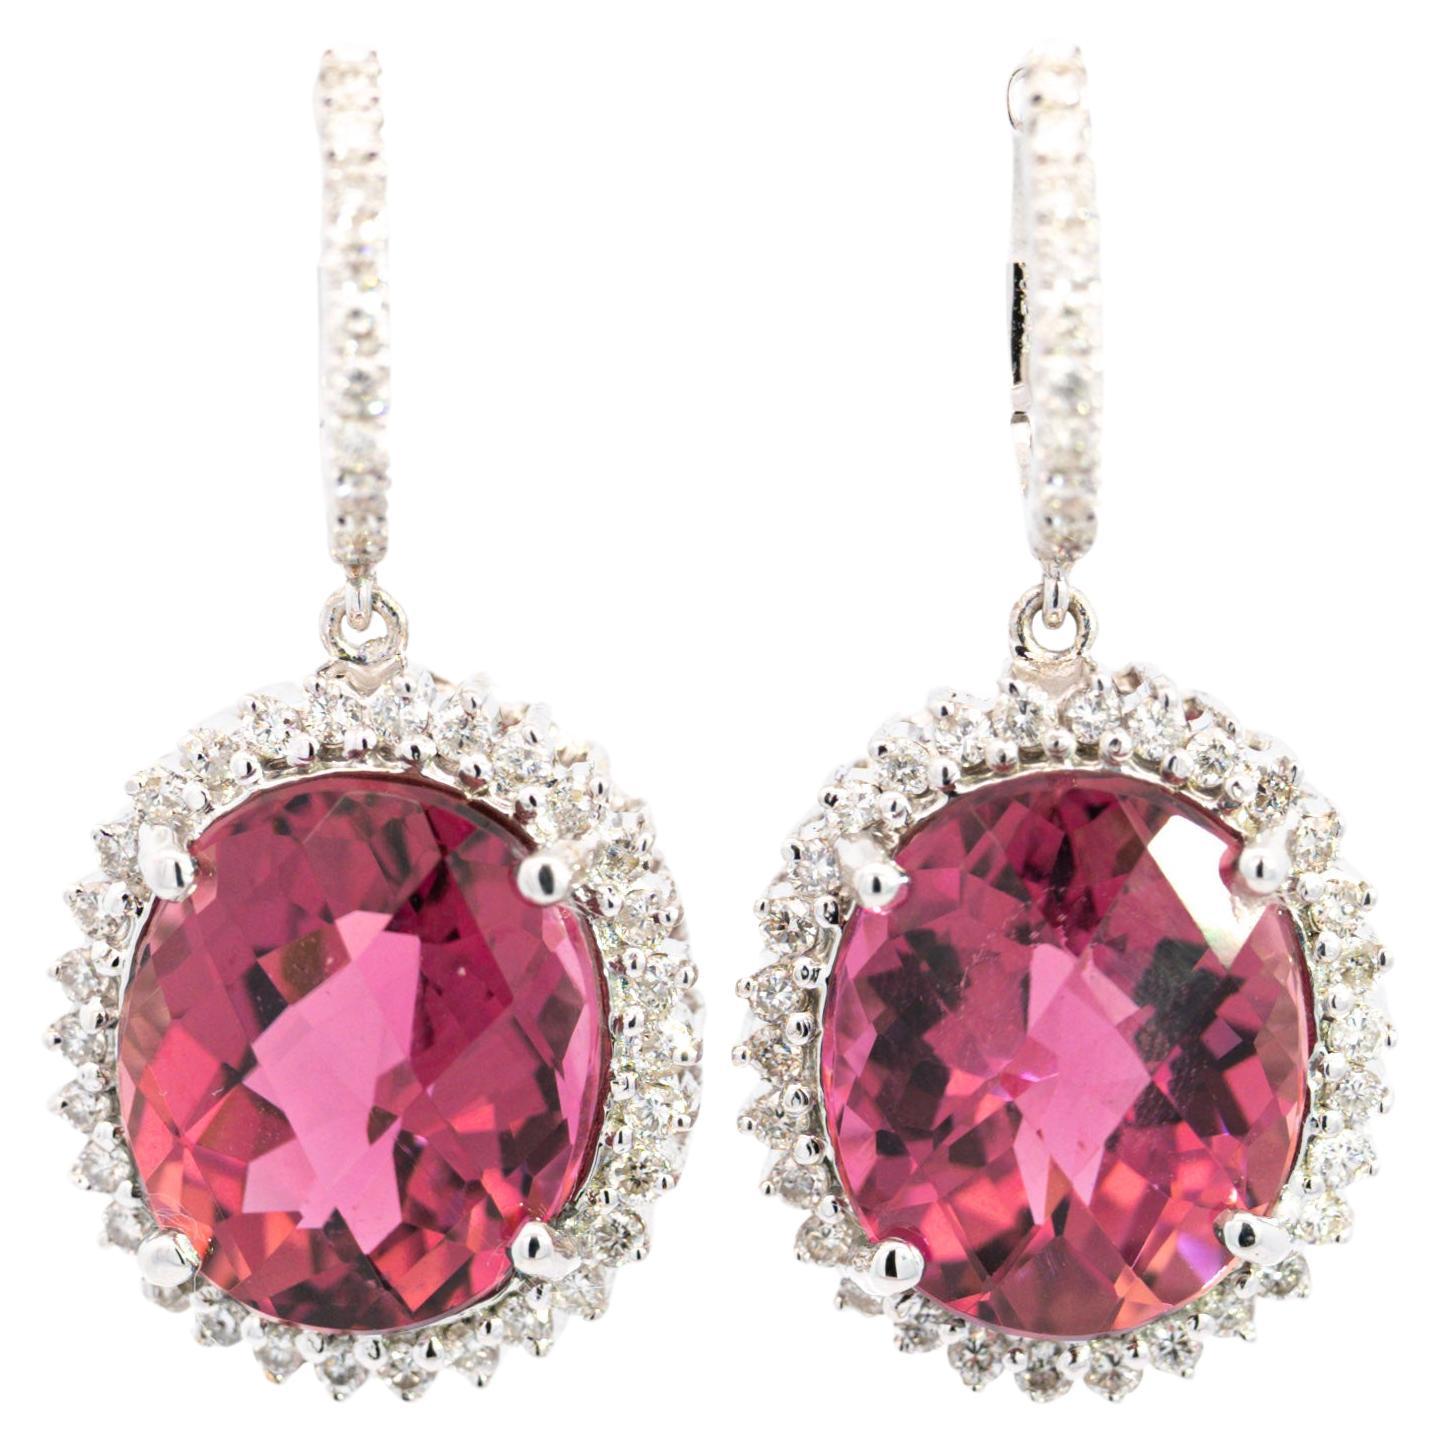 16 Carat Checkerboard Oval-Cut Pink Tourmaline and Diamond Halo Drop Earrings